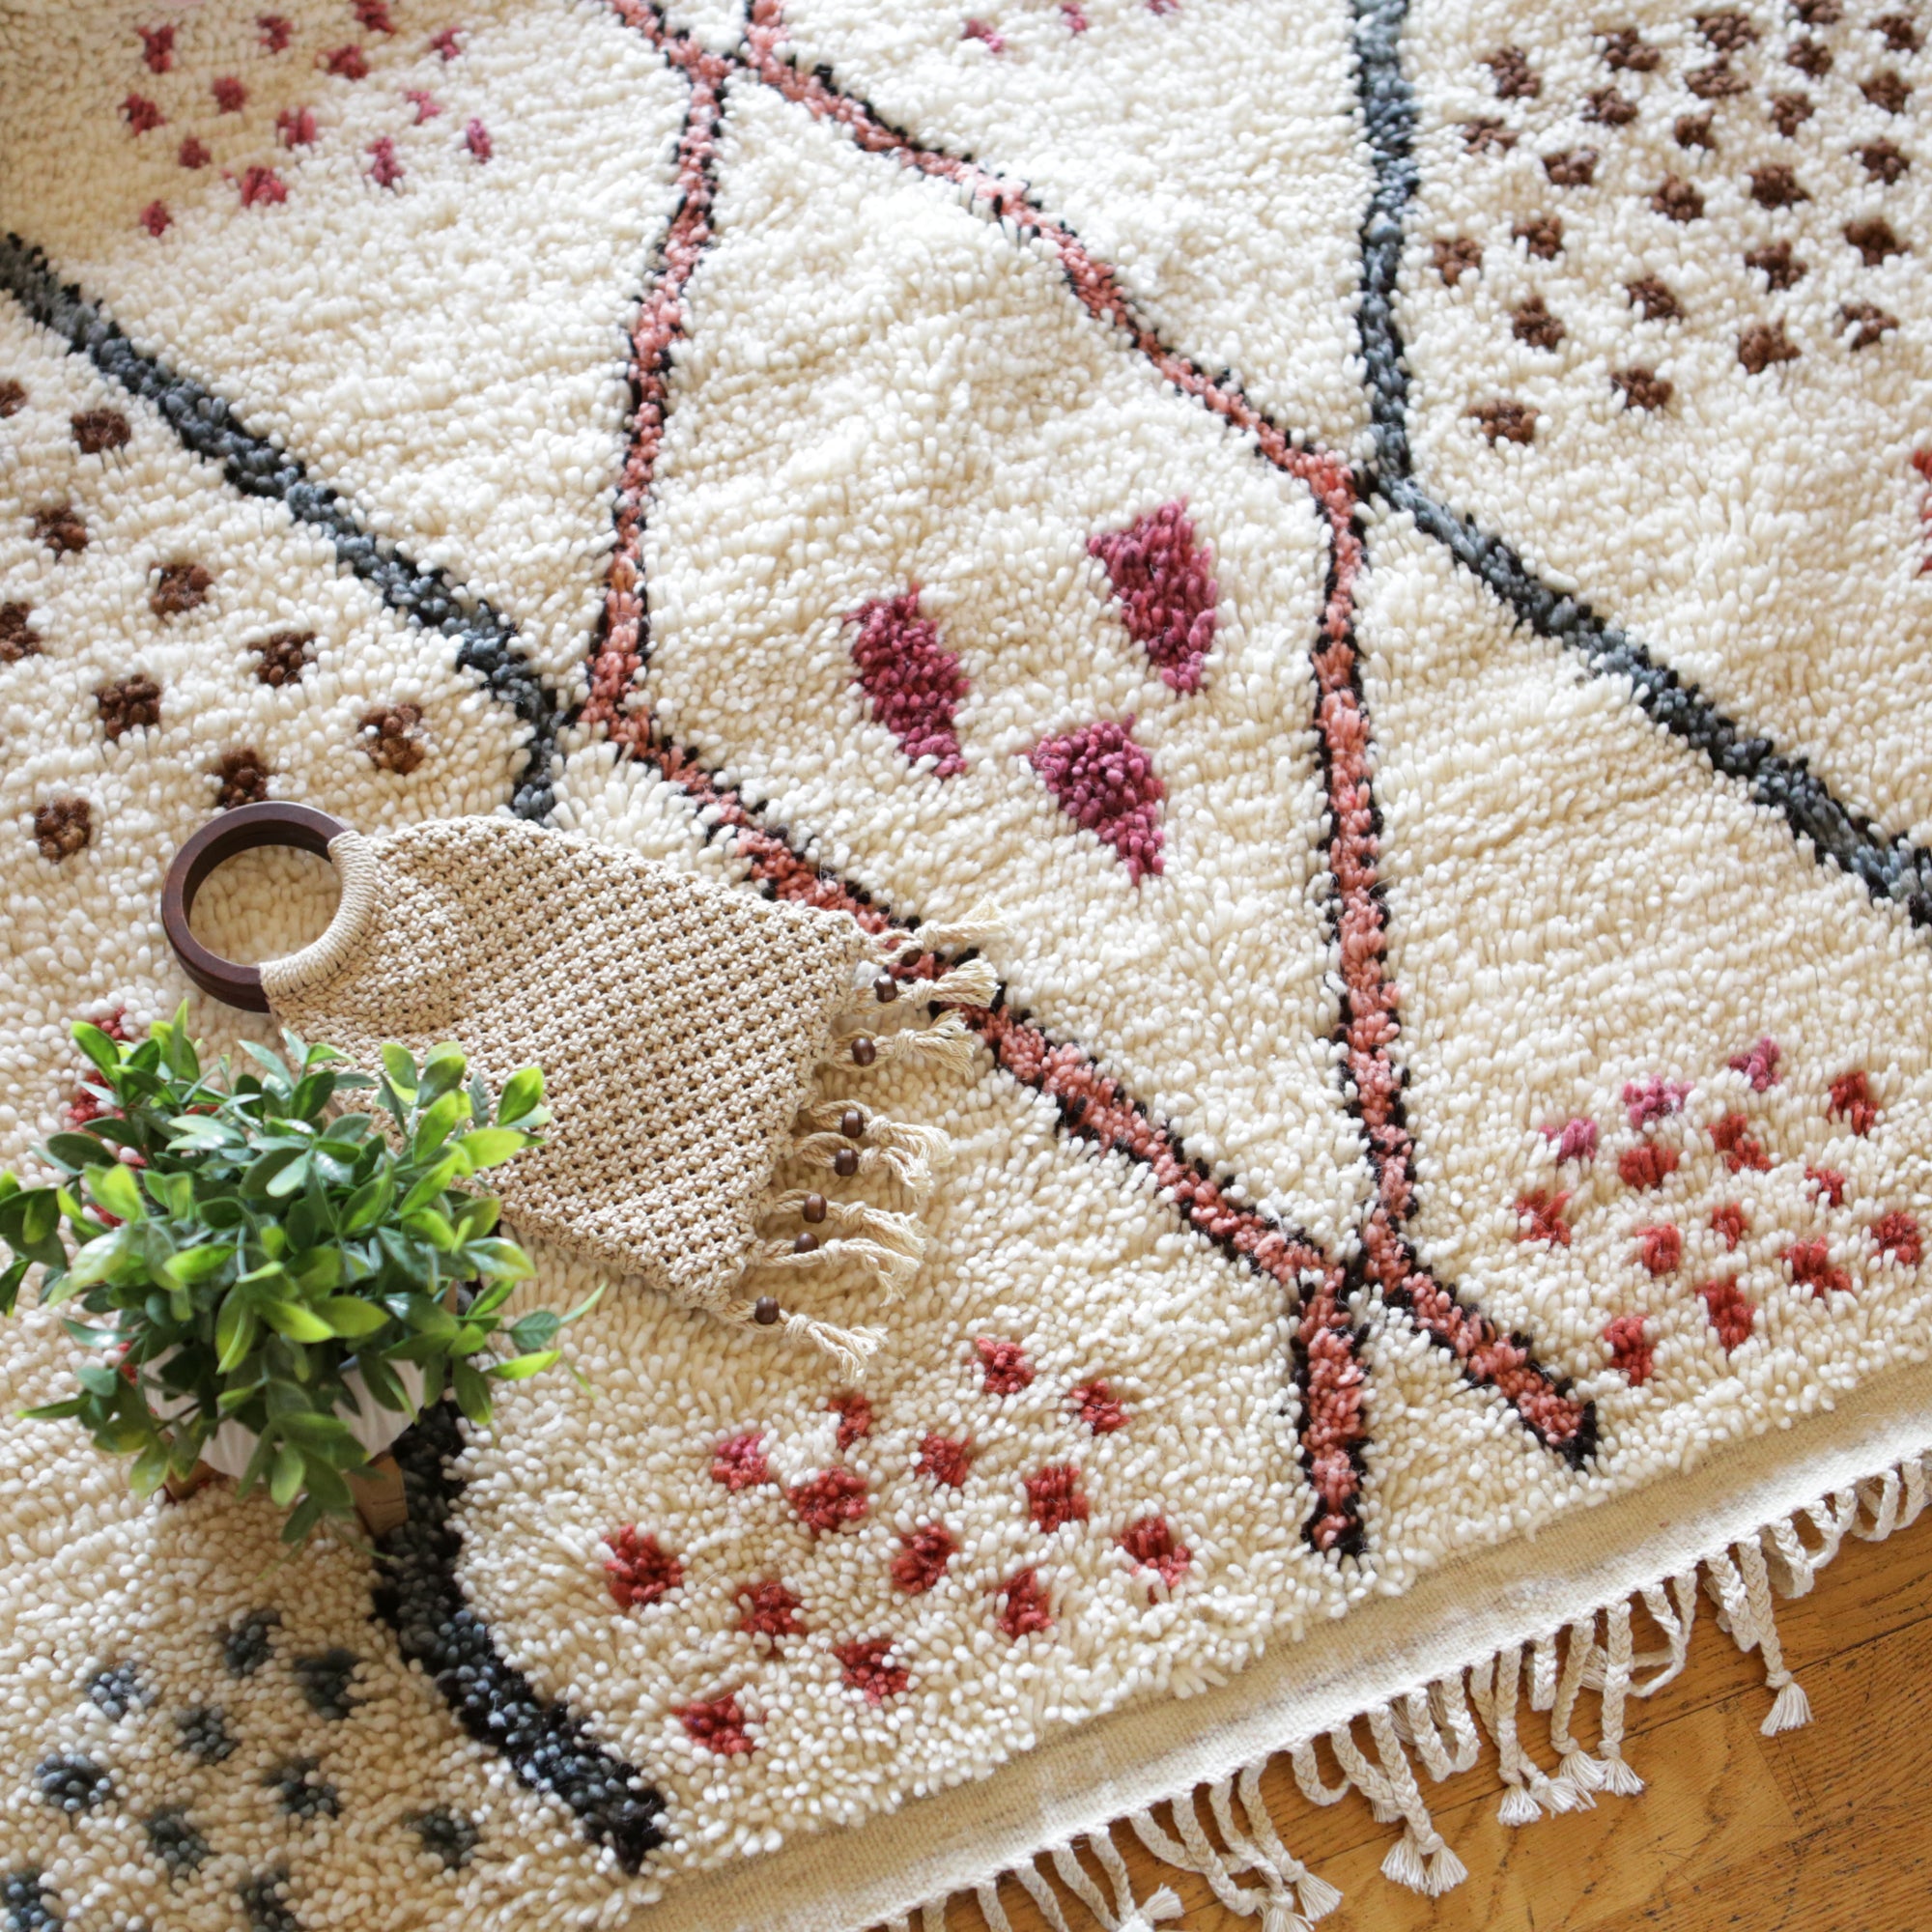 Maggie Shag Rug - bohemian style rug with orange et grey diamonds